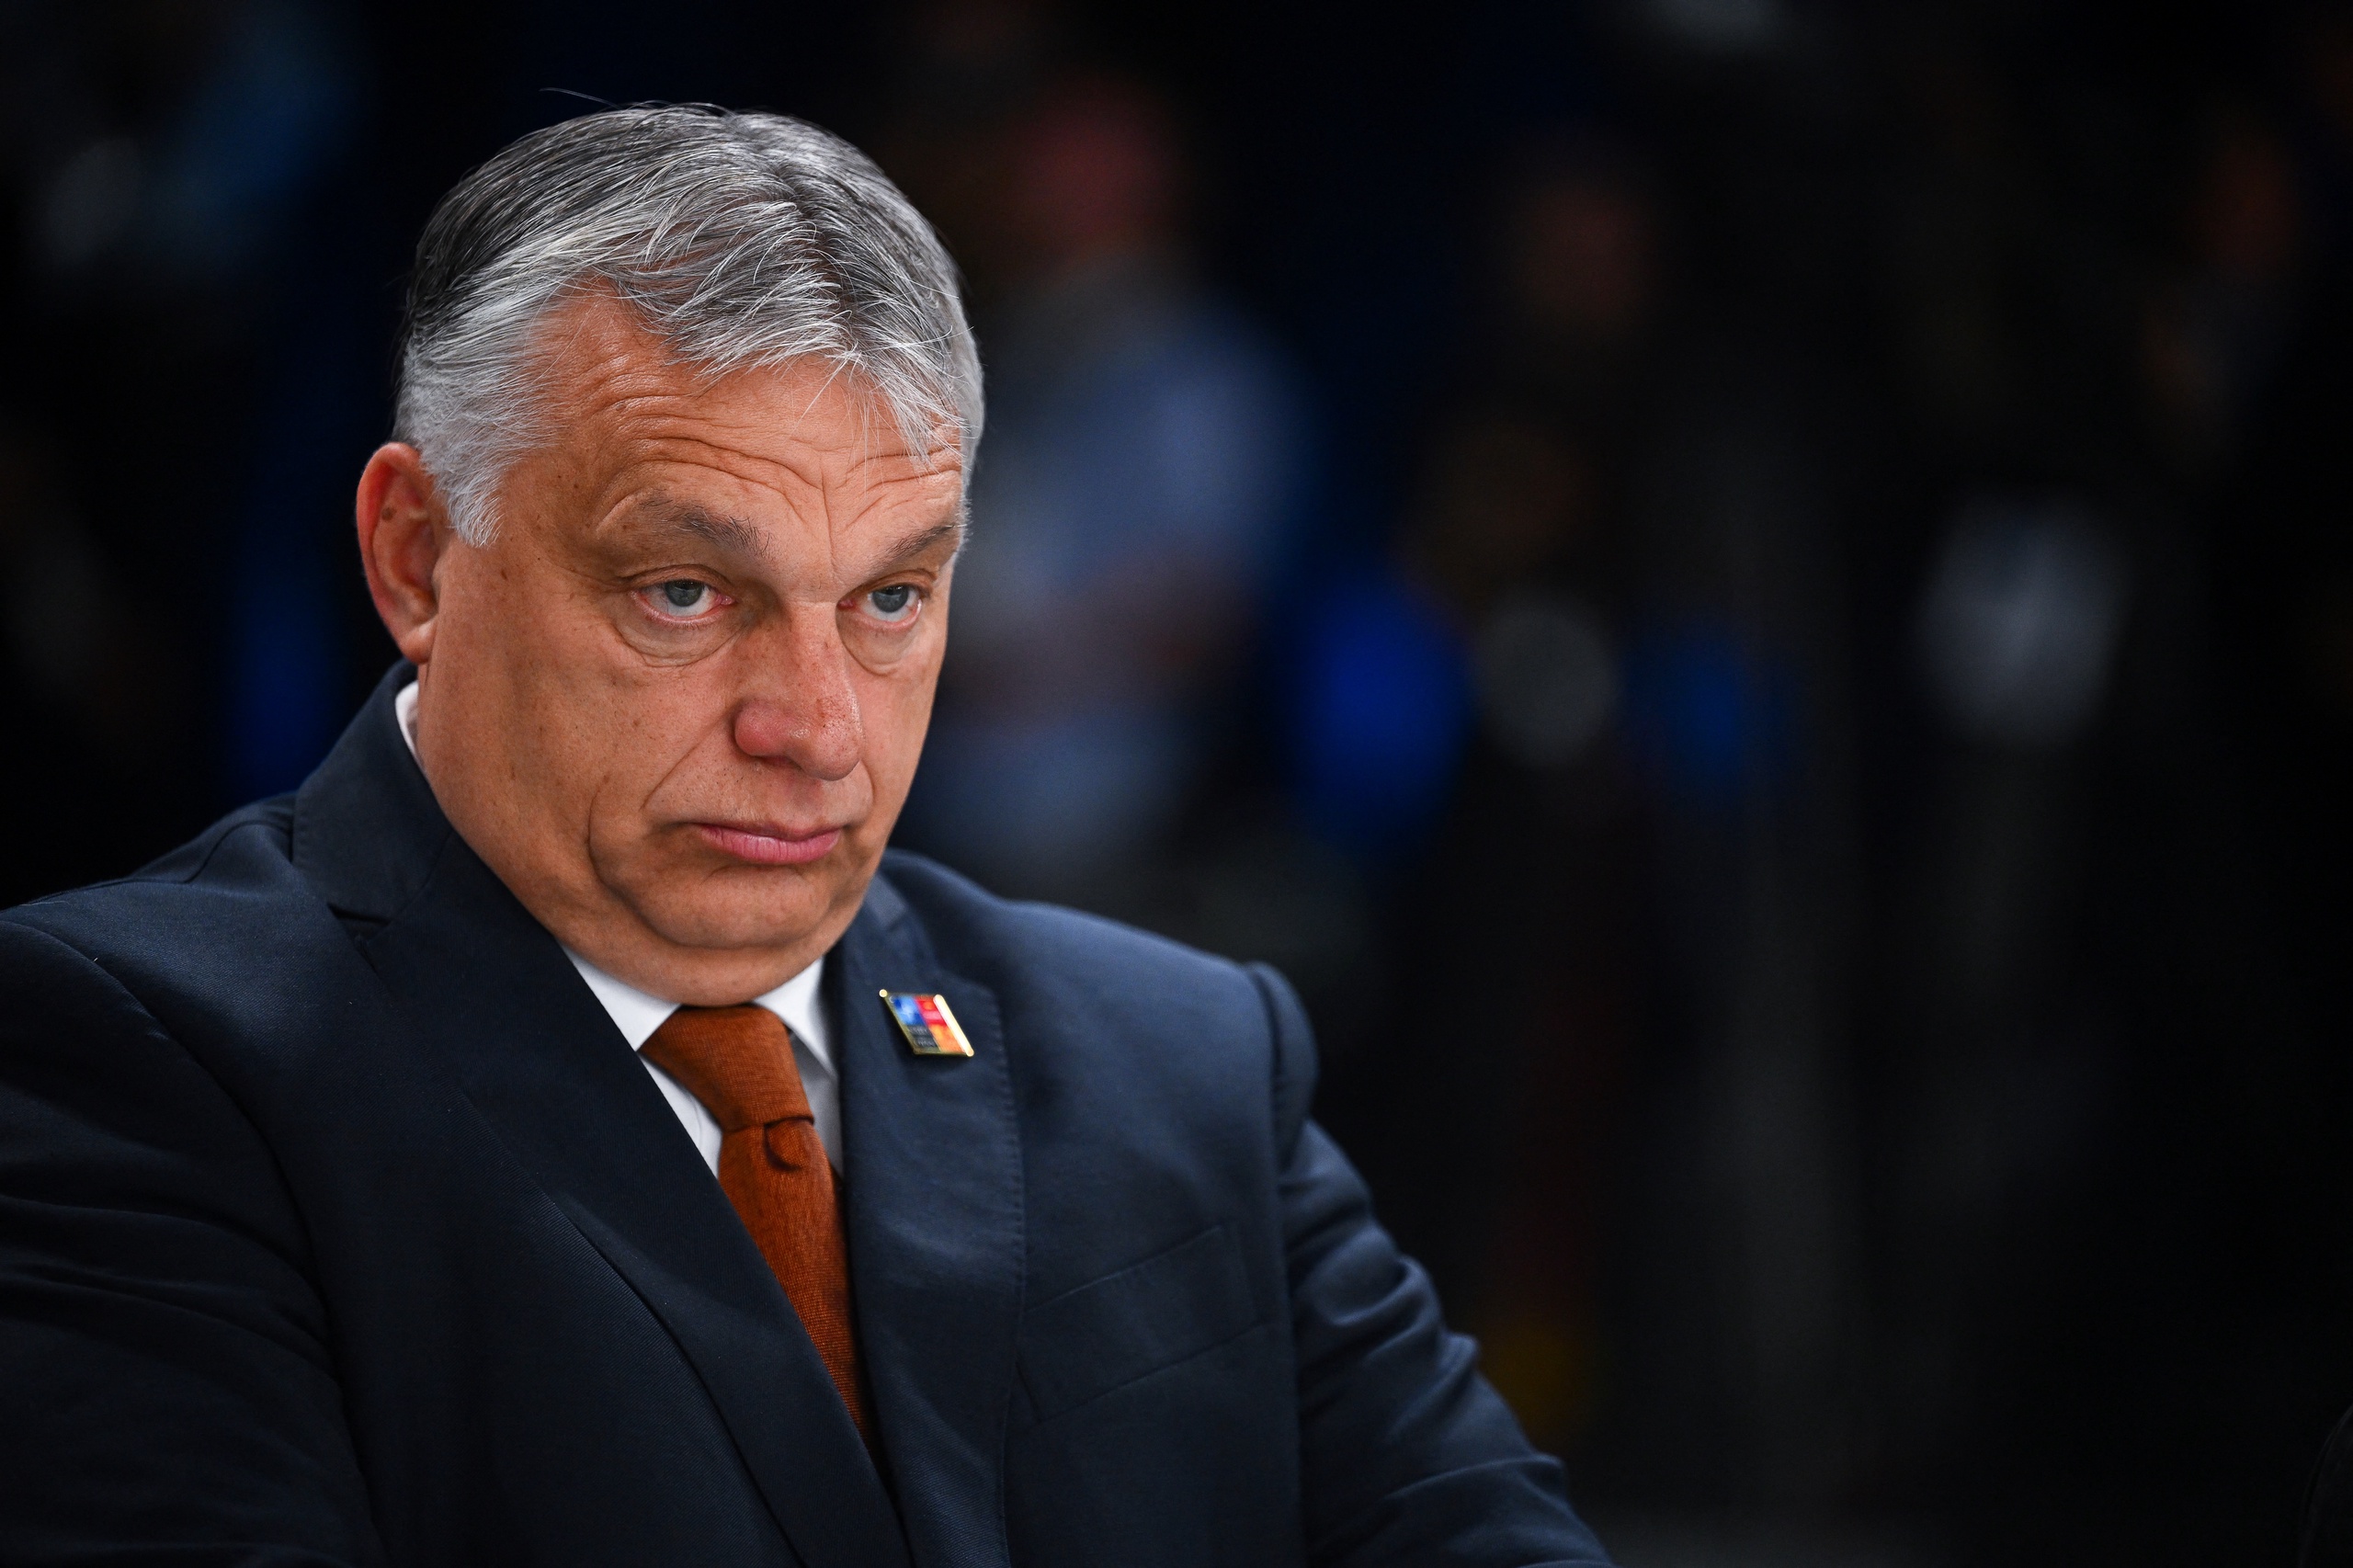 De Hongaarse premier Viktor Orbán